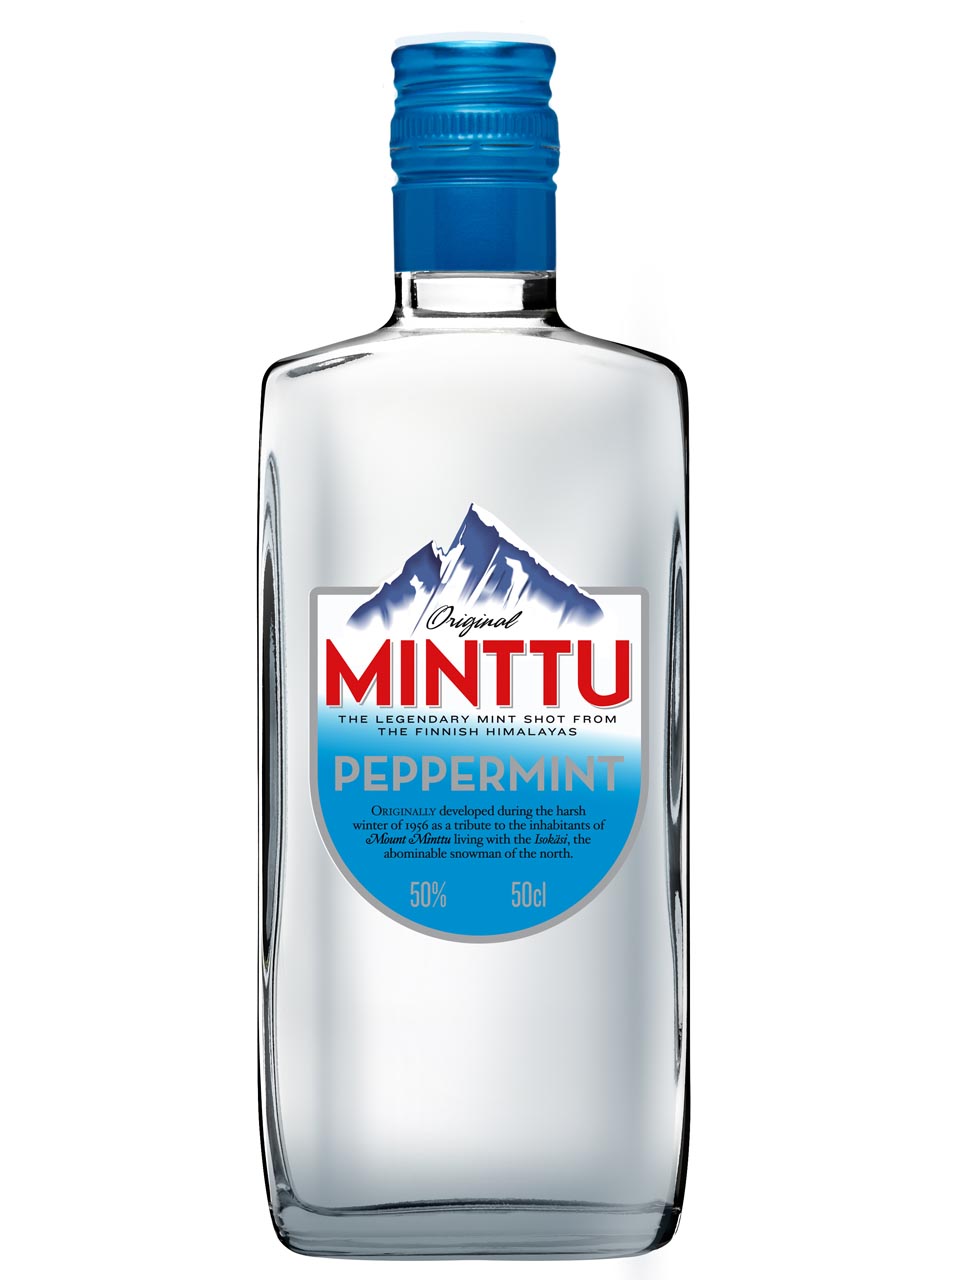 Chymos Minttu Finland Liqueur Peppermint 50% 0.5L null - onesize - 1